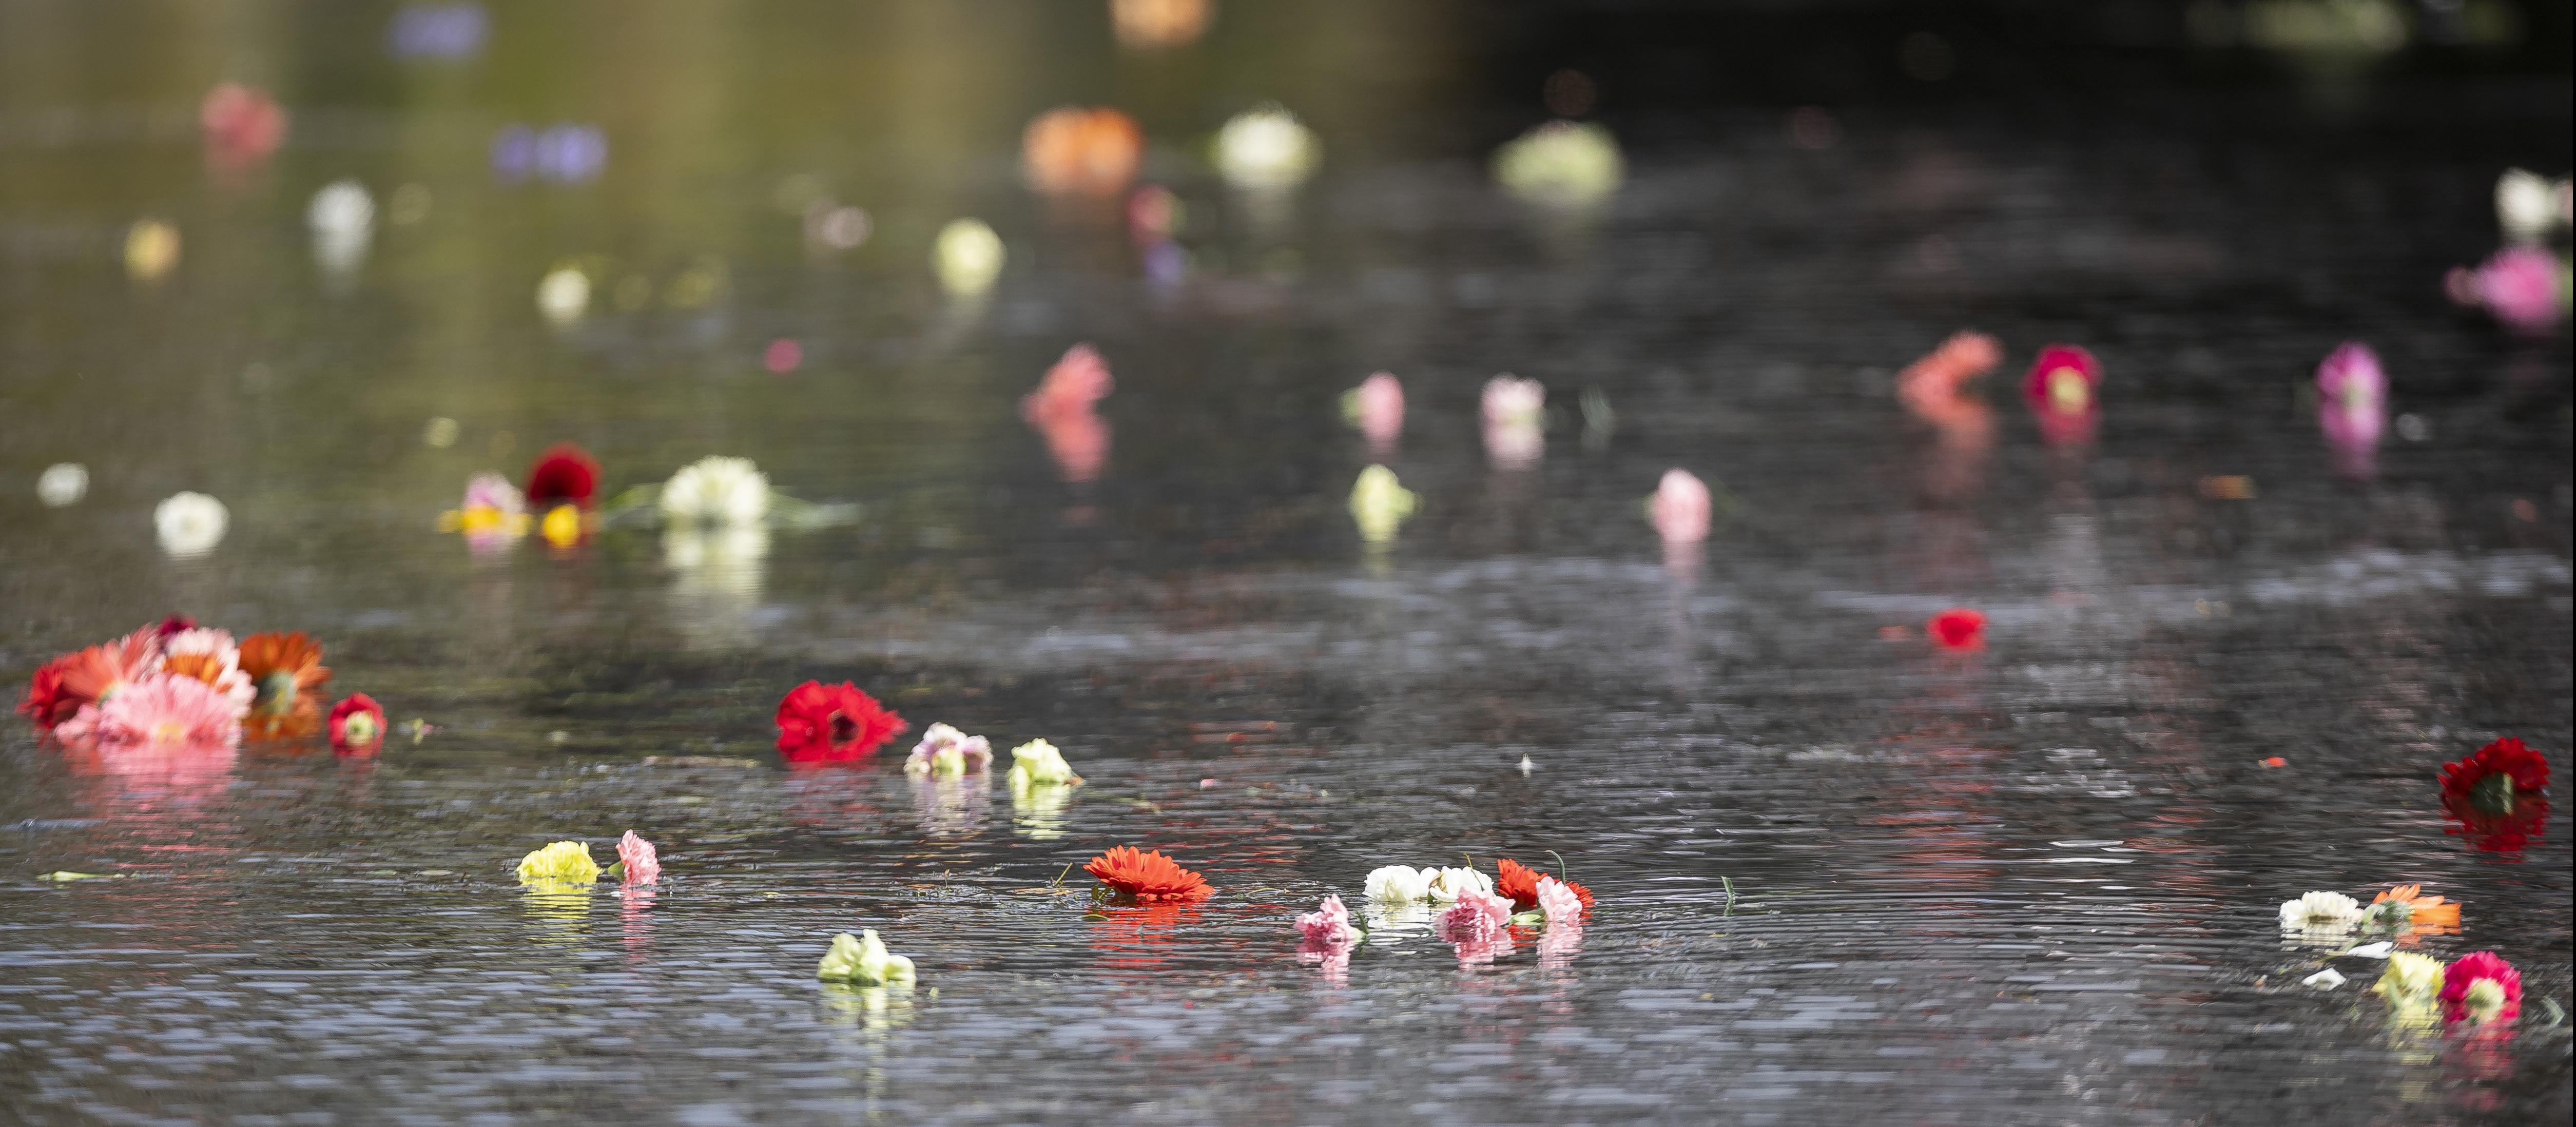 River of flowers Christchurch Earthquake memorial credit STUFF